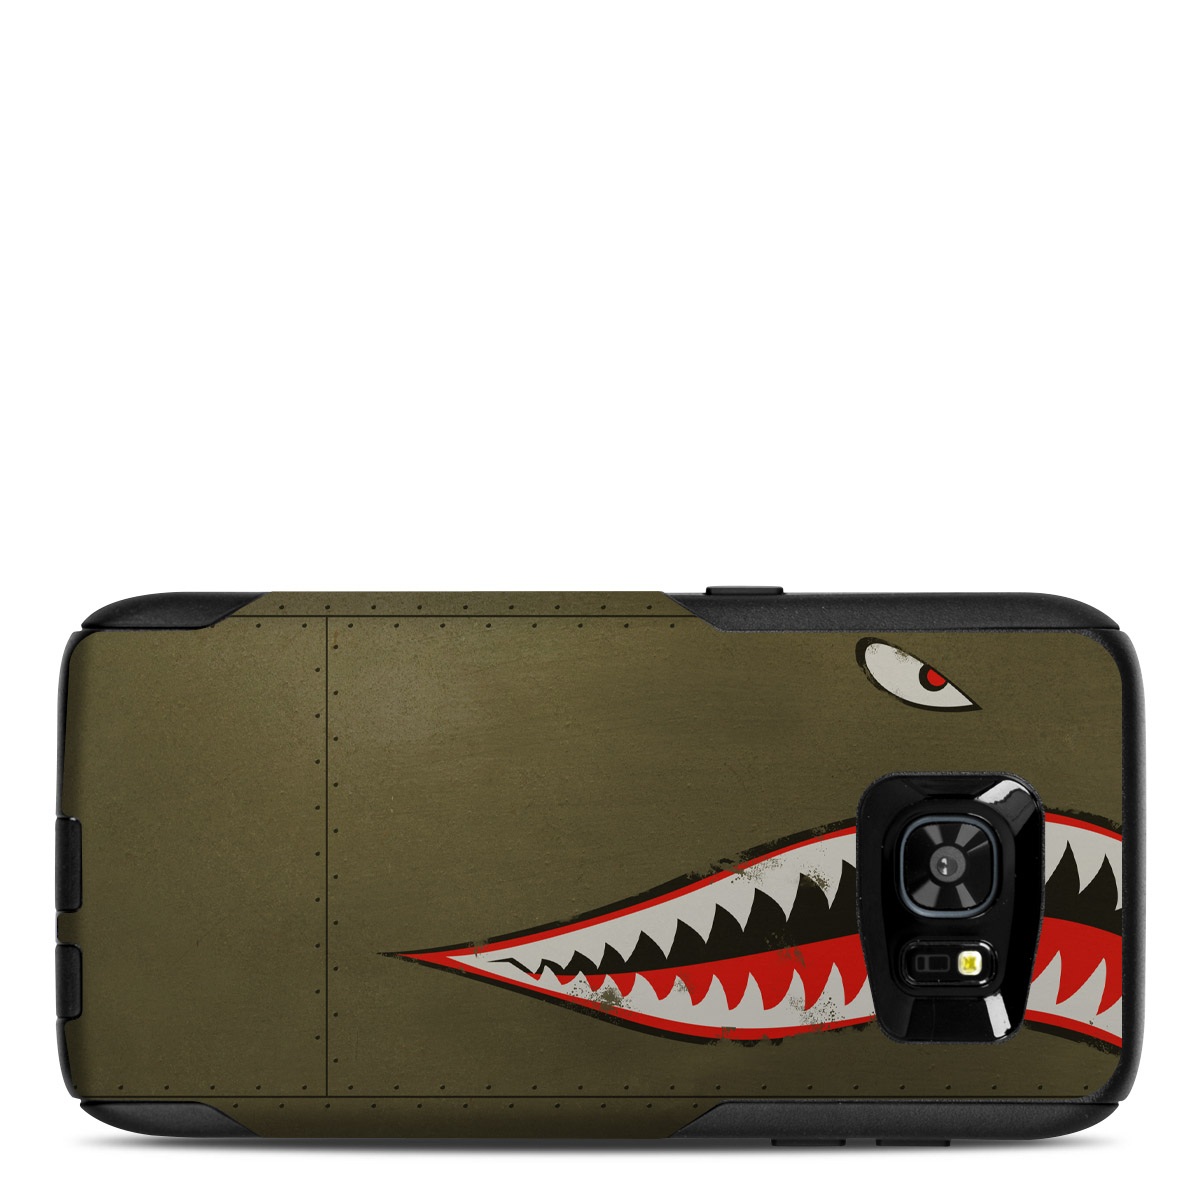 OtterBox Commuter Galaxy S7 Edge Case Skin - USAF Shark (Image 1)